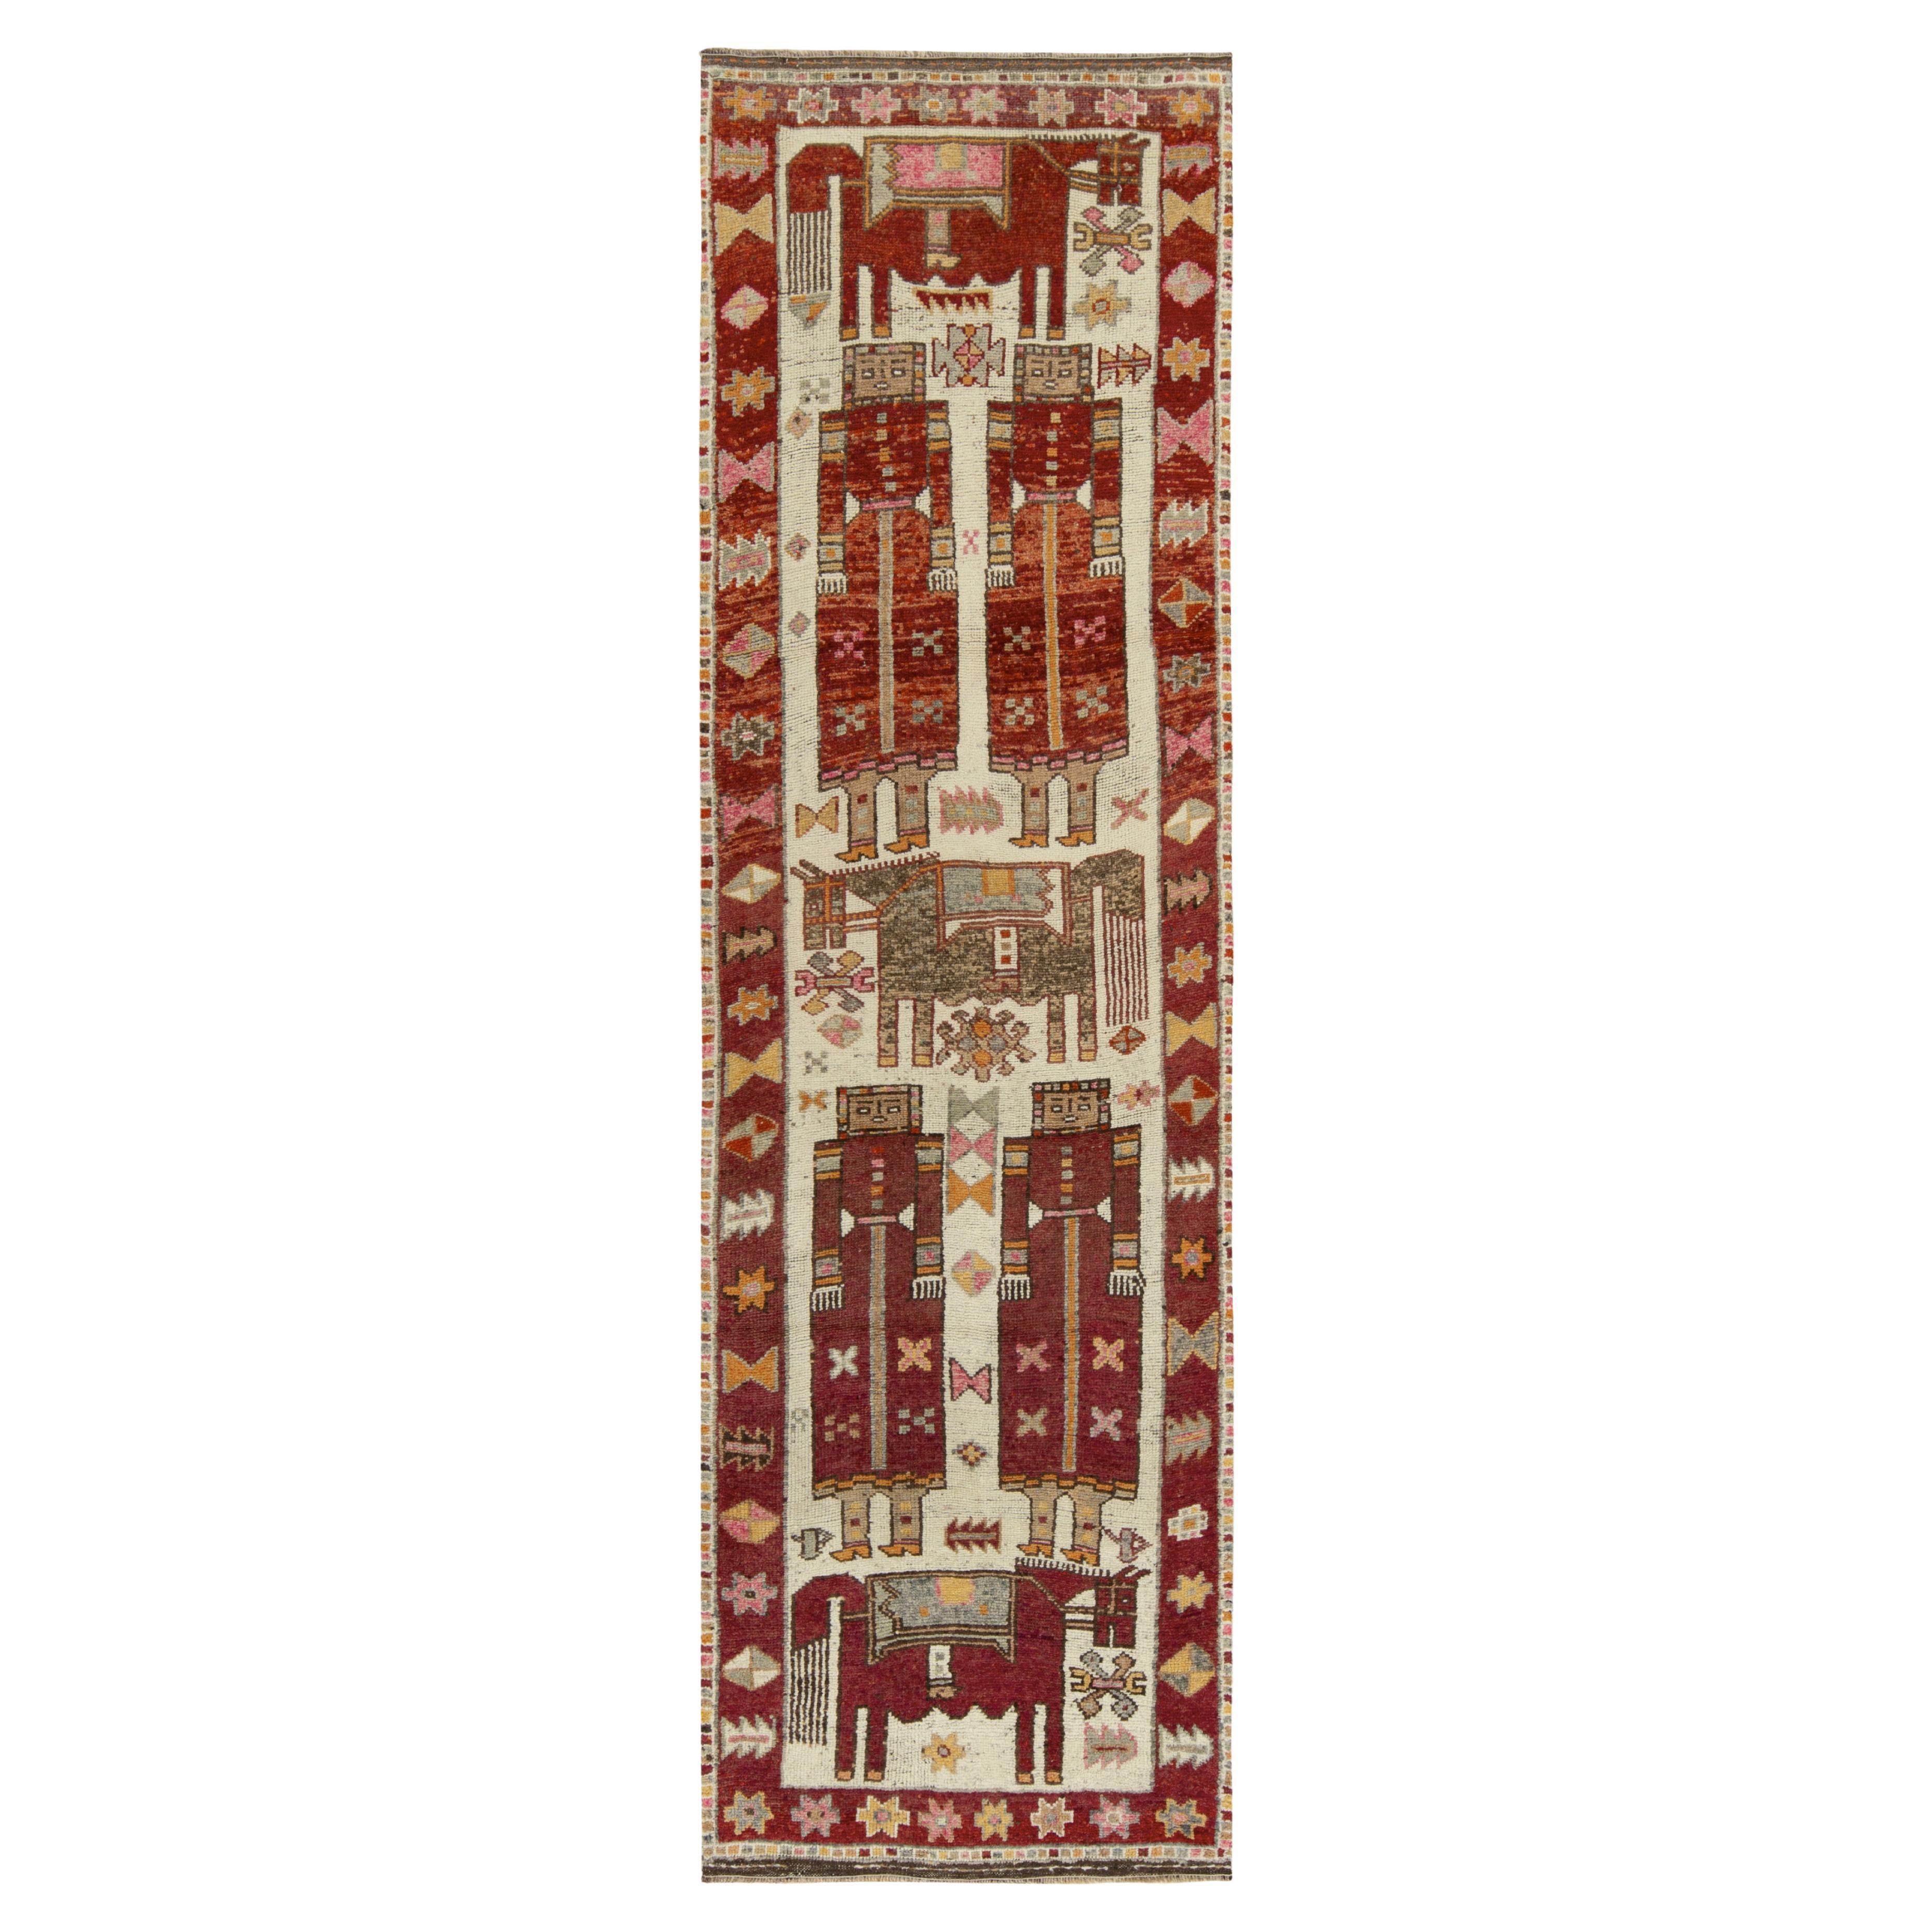 1950s Vintage Tribal Rug in Red, Beige Pictorials Floral Pattern by Rug & Kilim For Sale